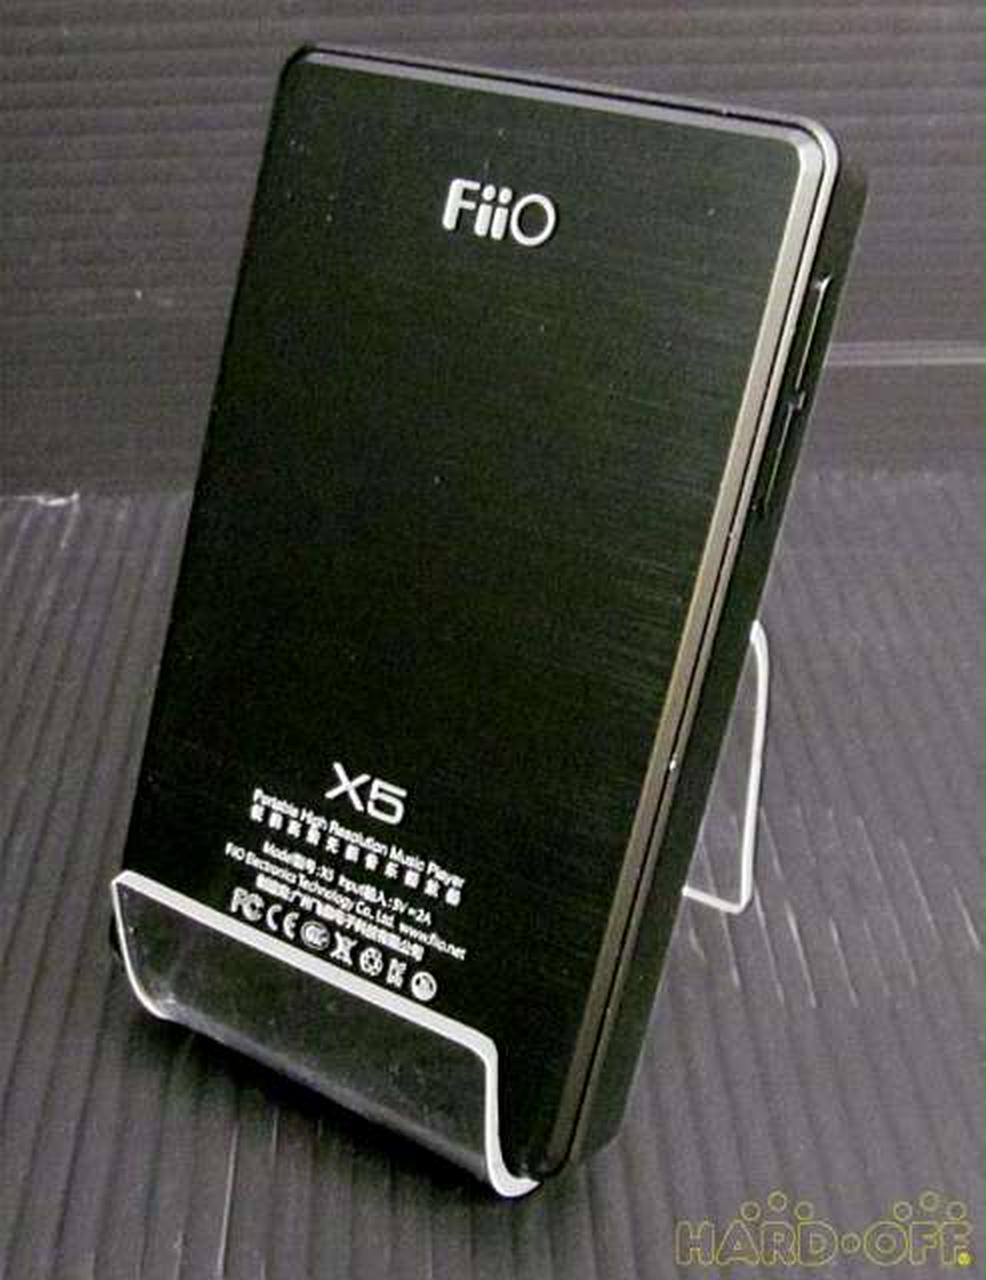 FiiO digital audio player model number: X5 digital audio player Used in Japan